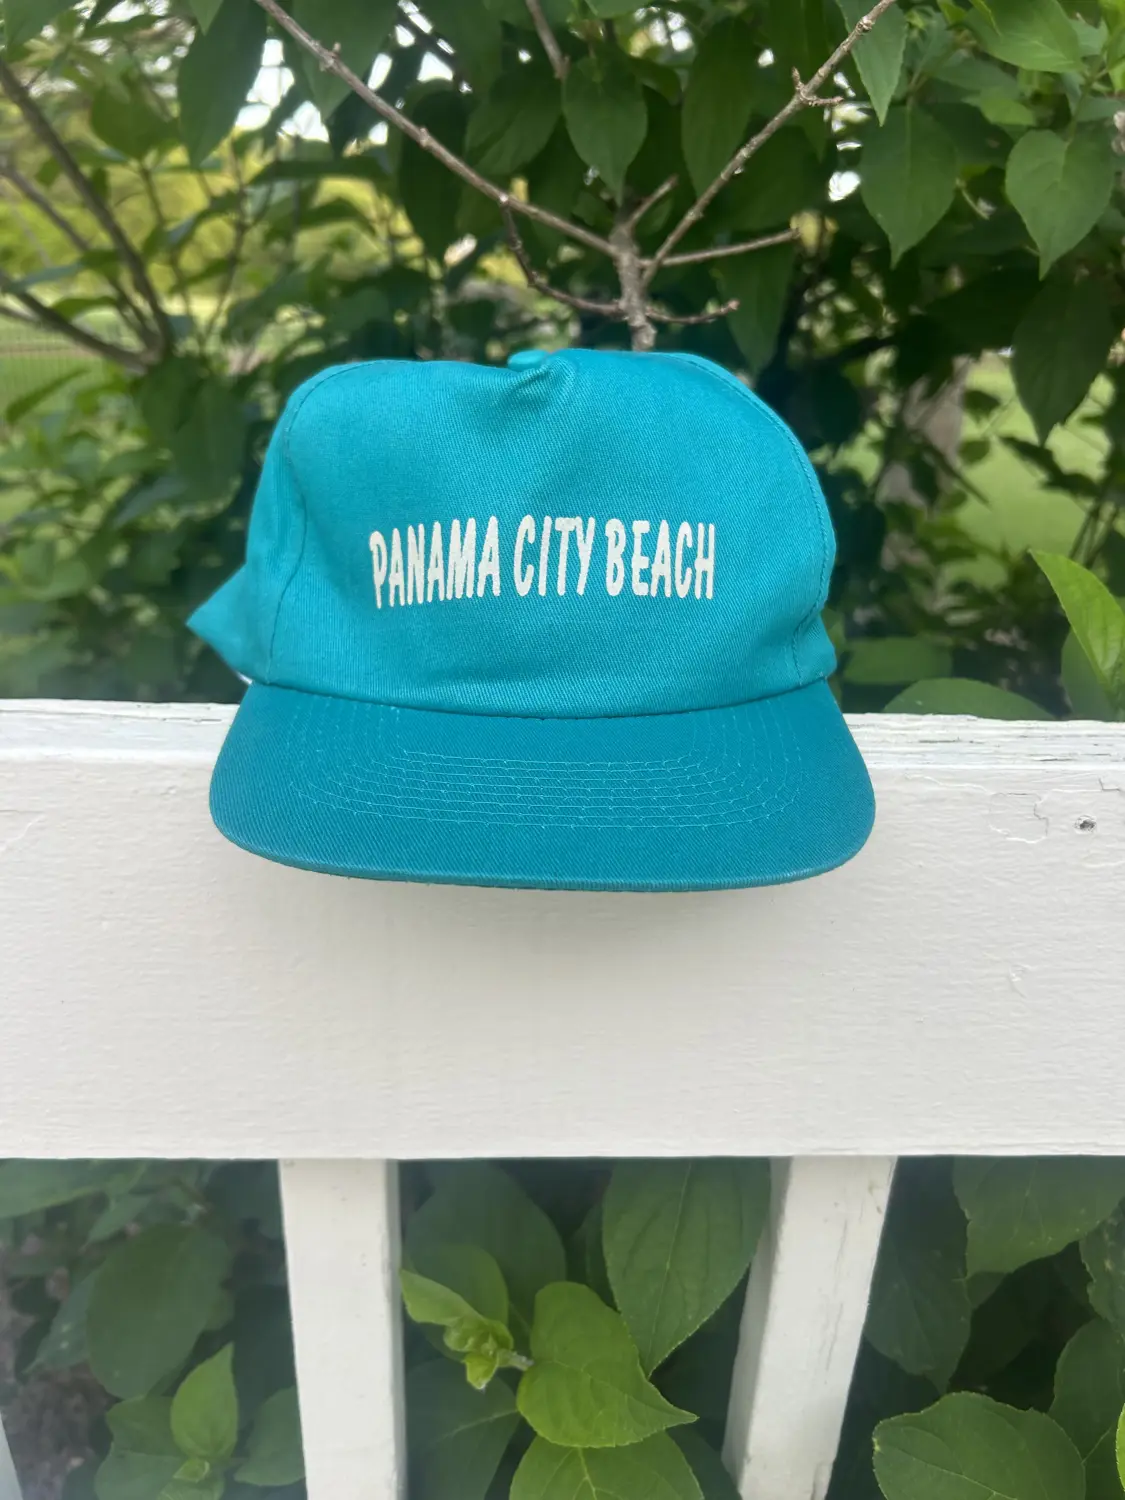 Vintage Panama City Beach Hat